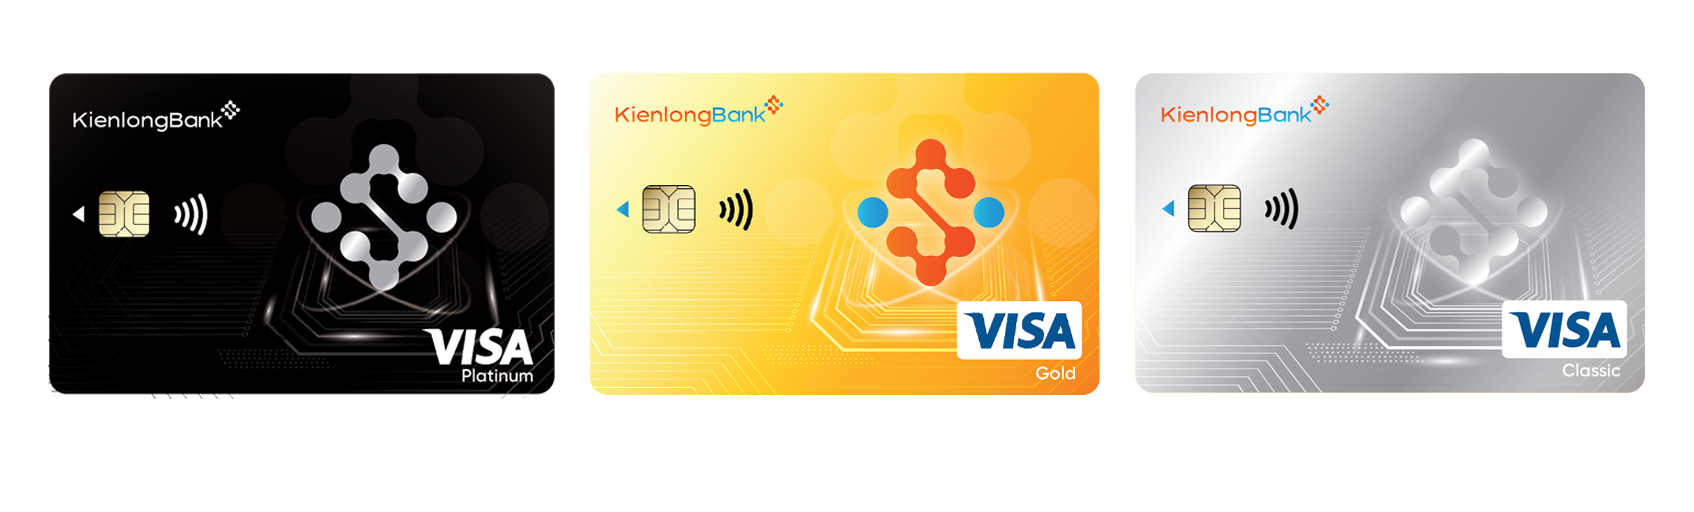 Kienlongbank Visa Contactless international credit card